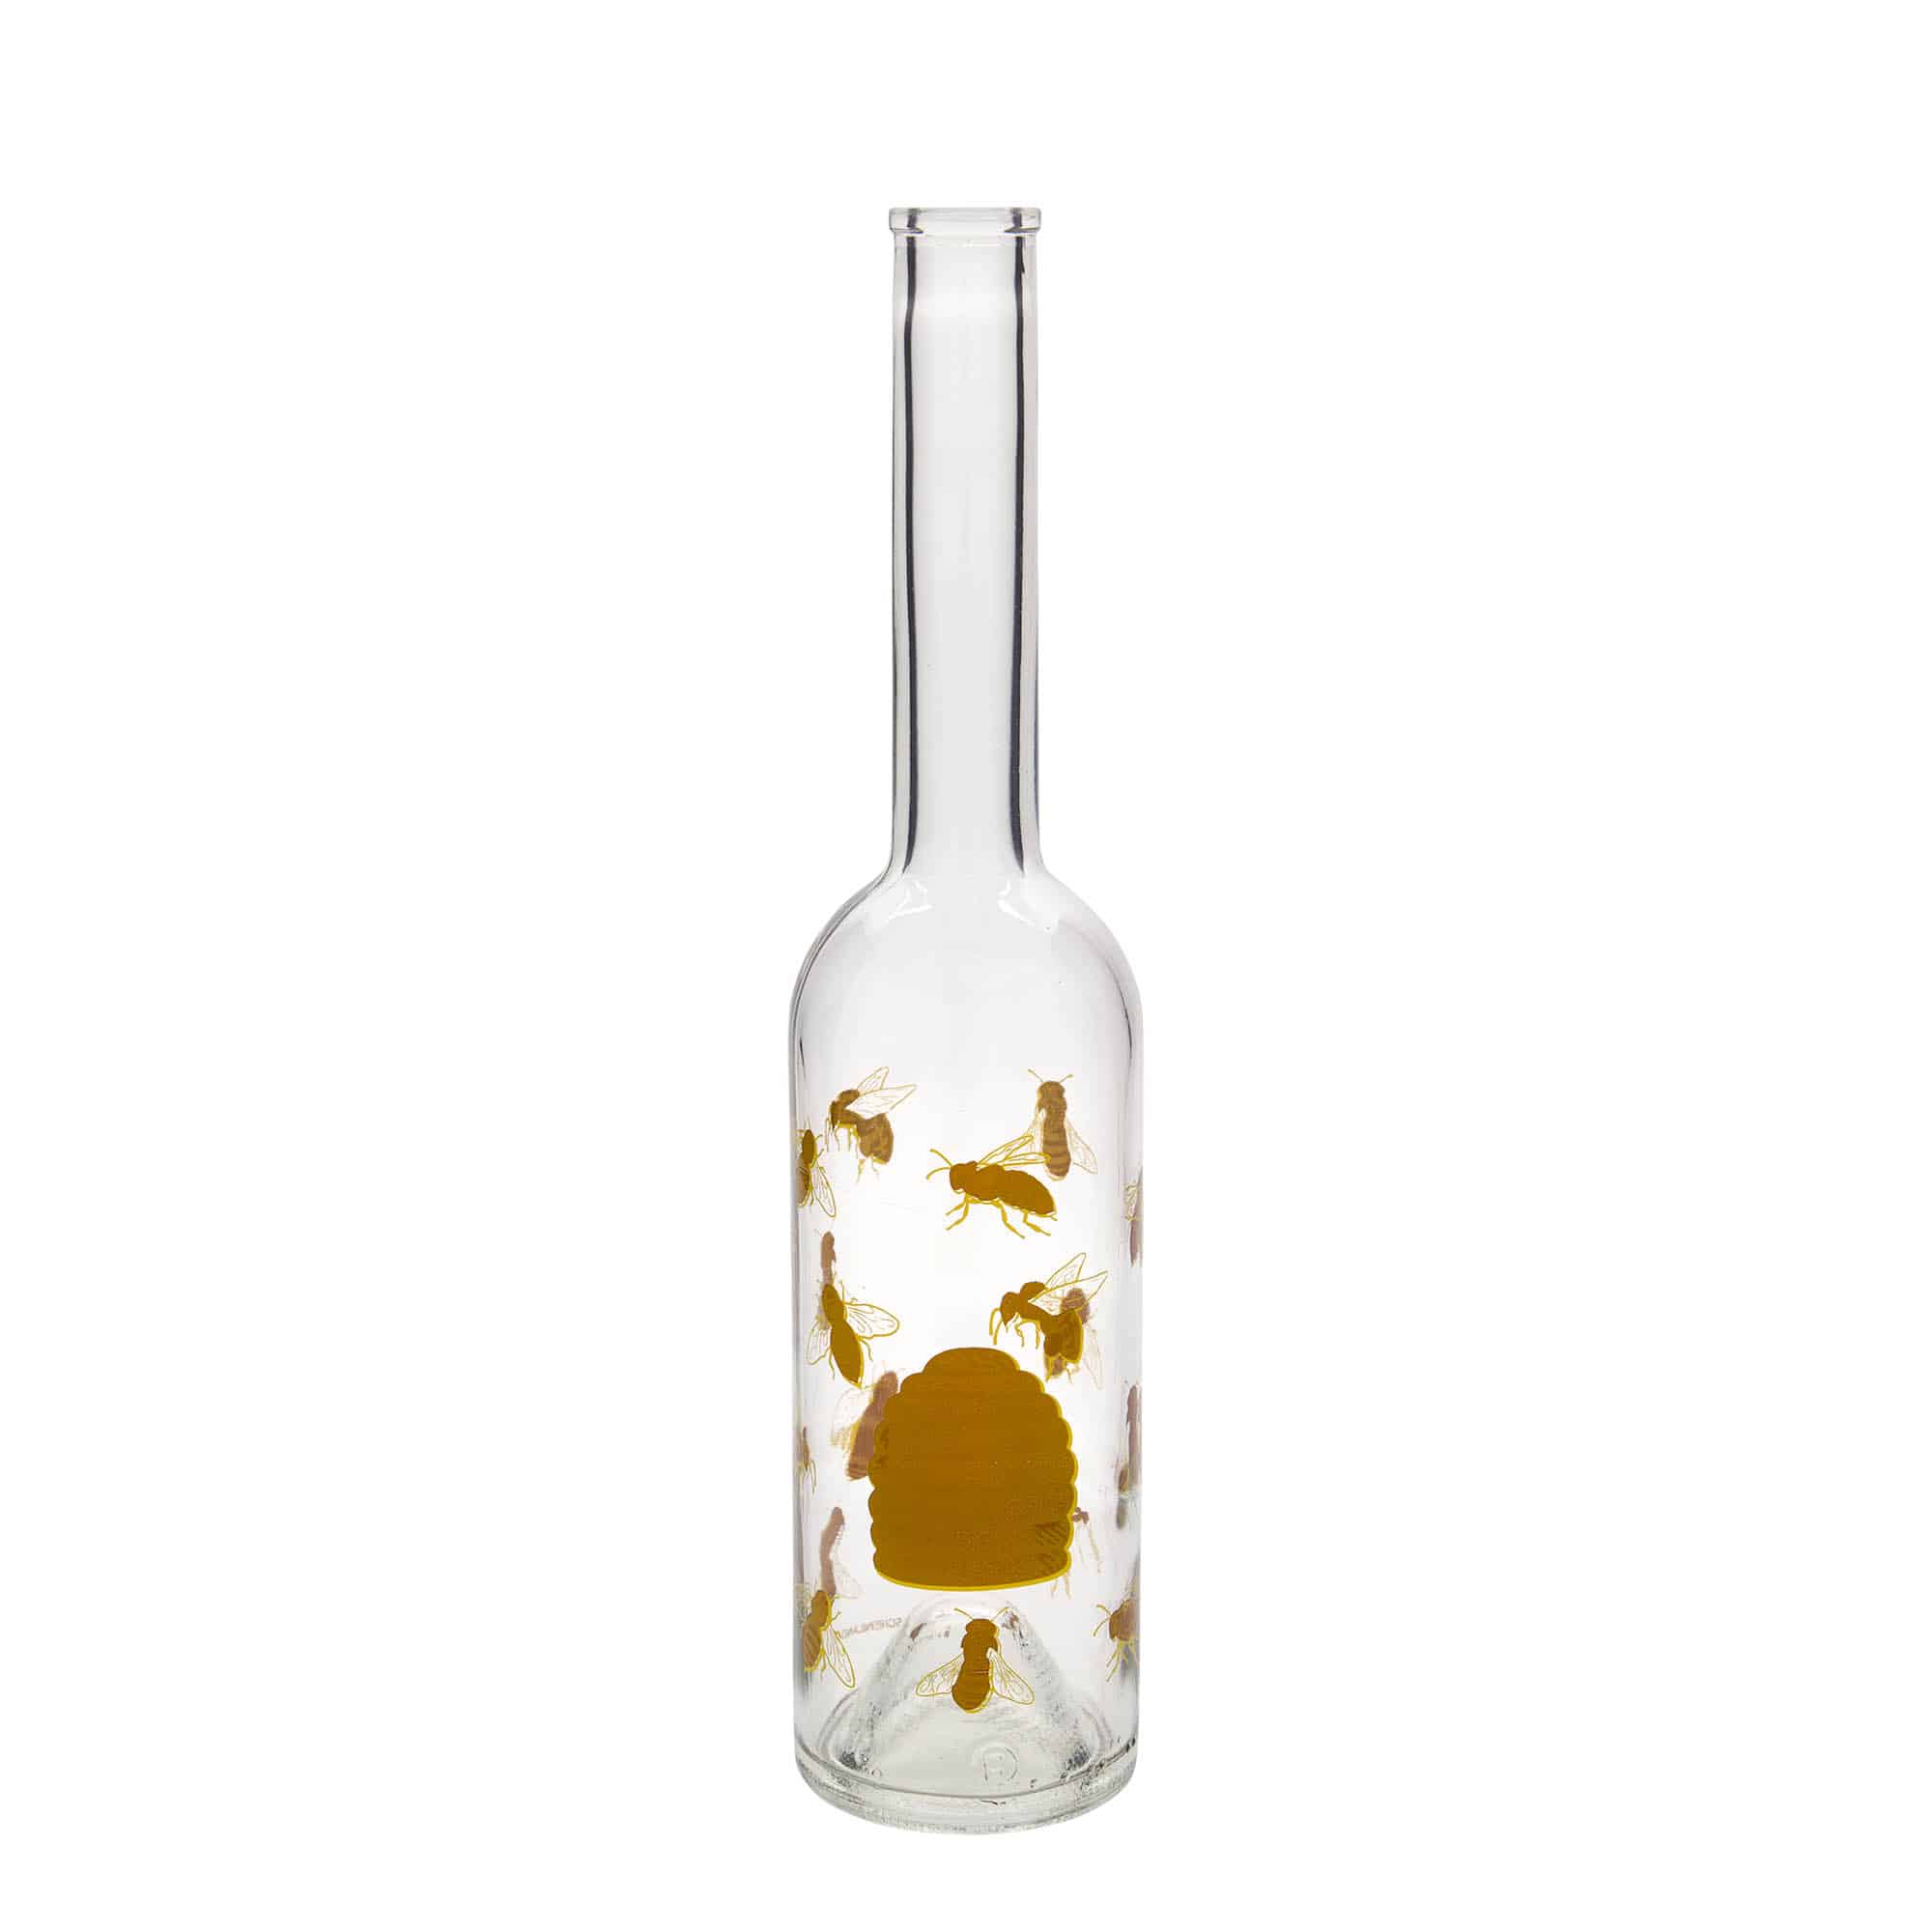 500 ml glass bottle 'Opera', print: bees, closure: cork